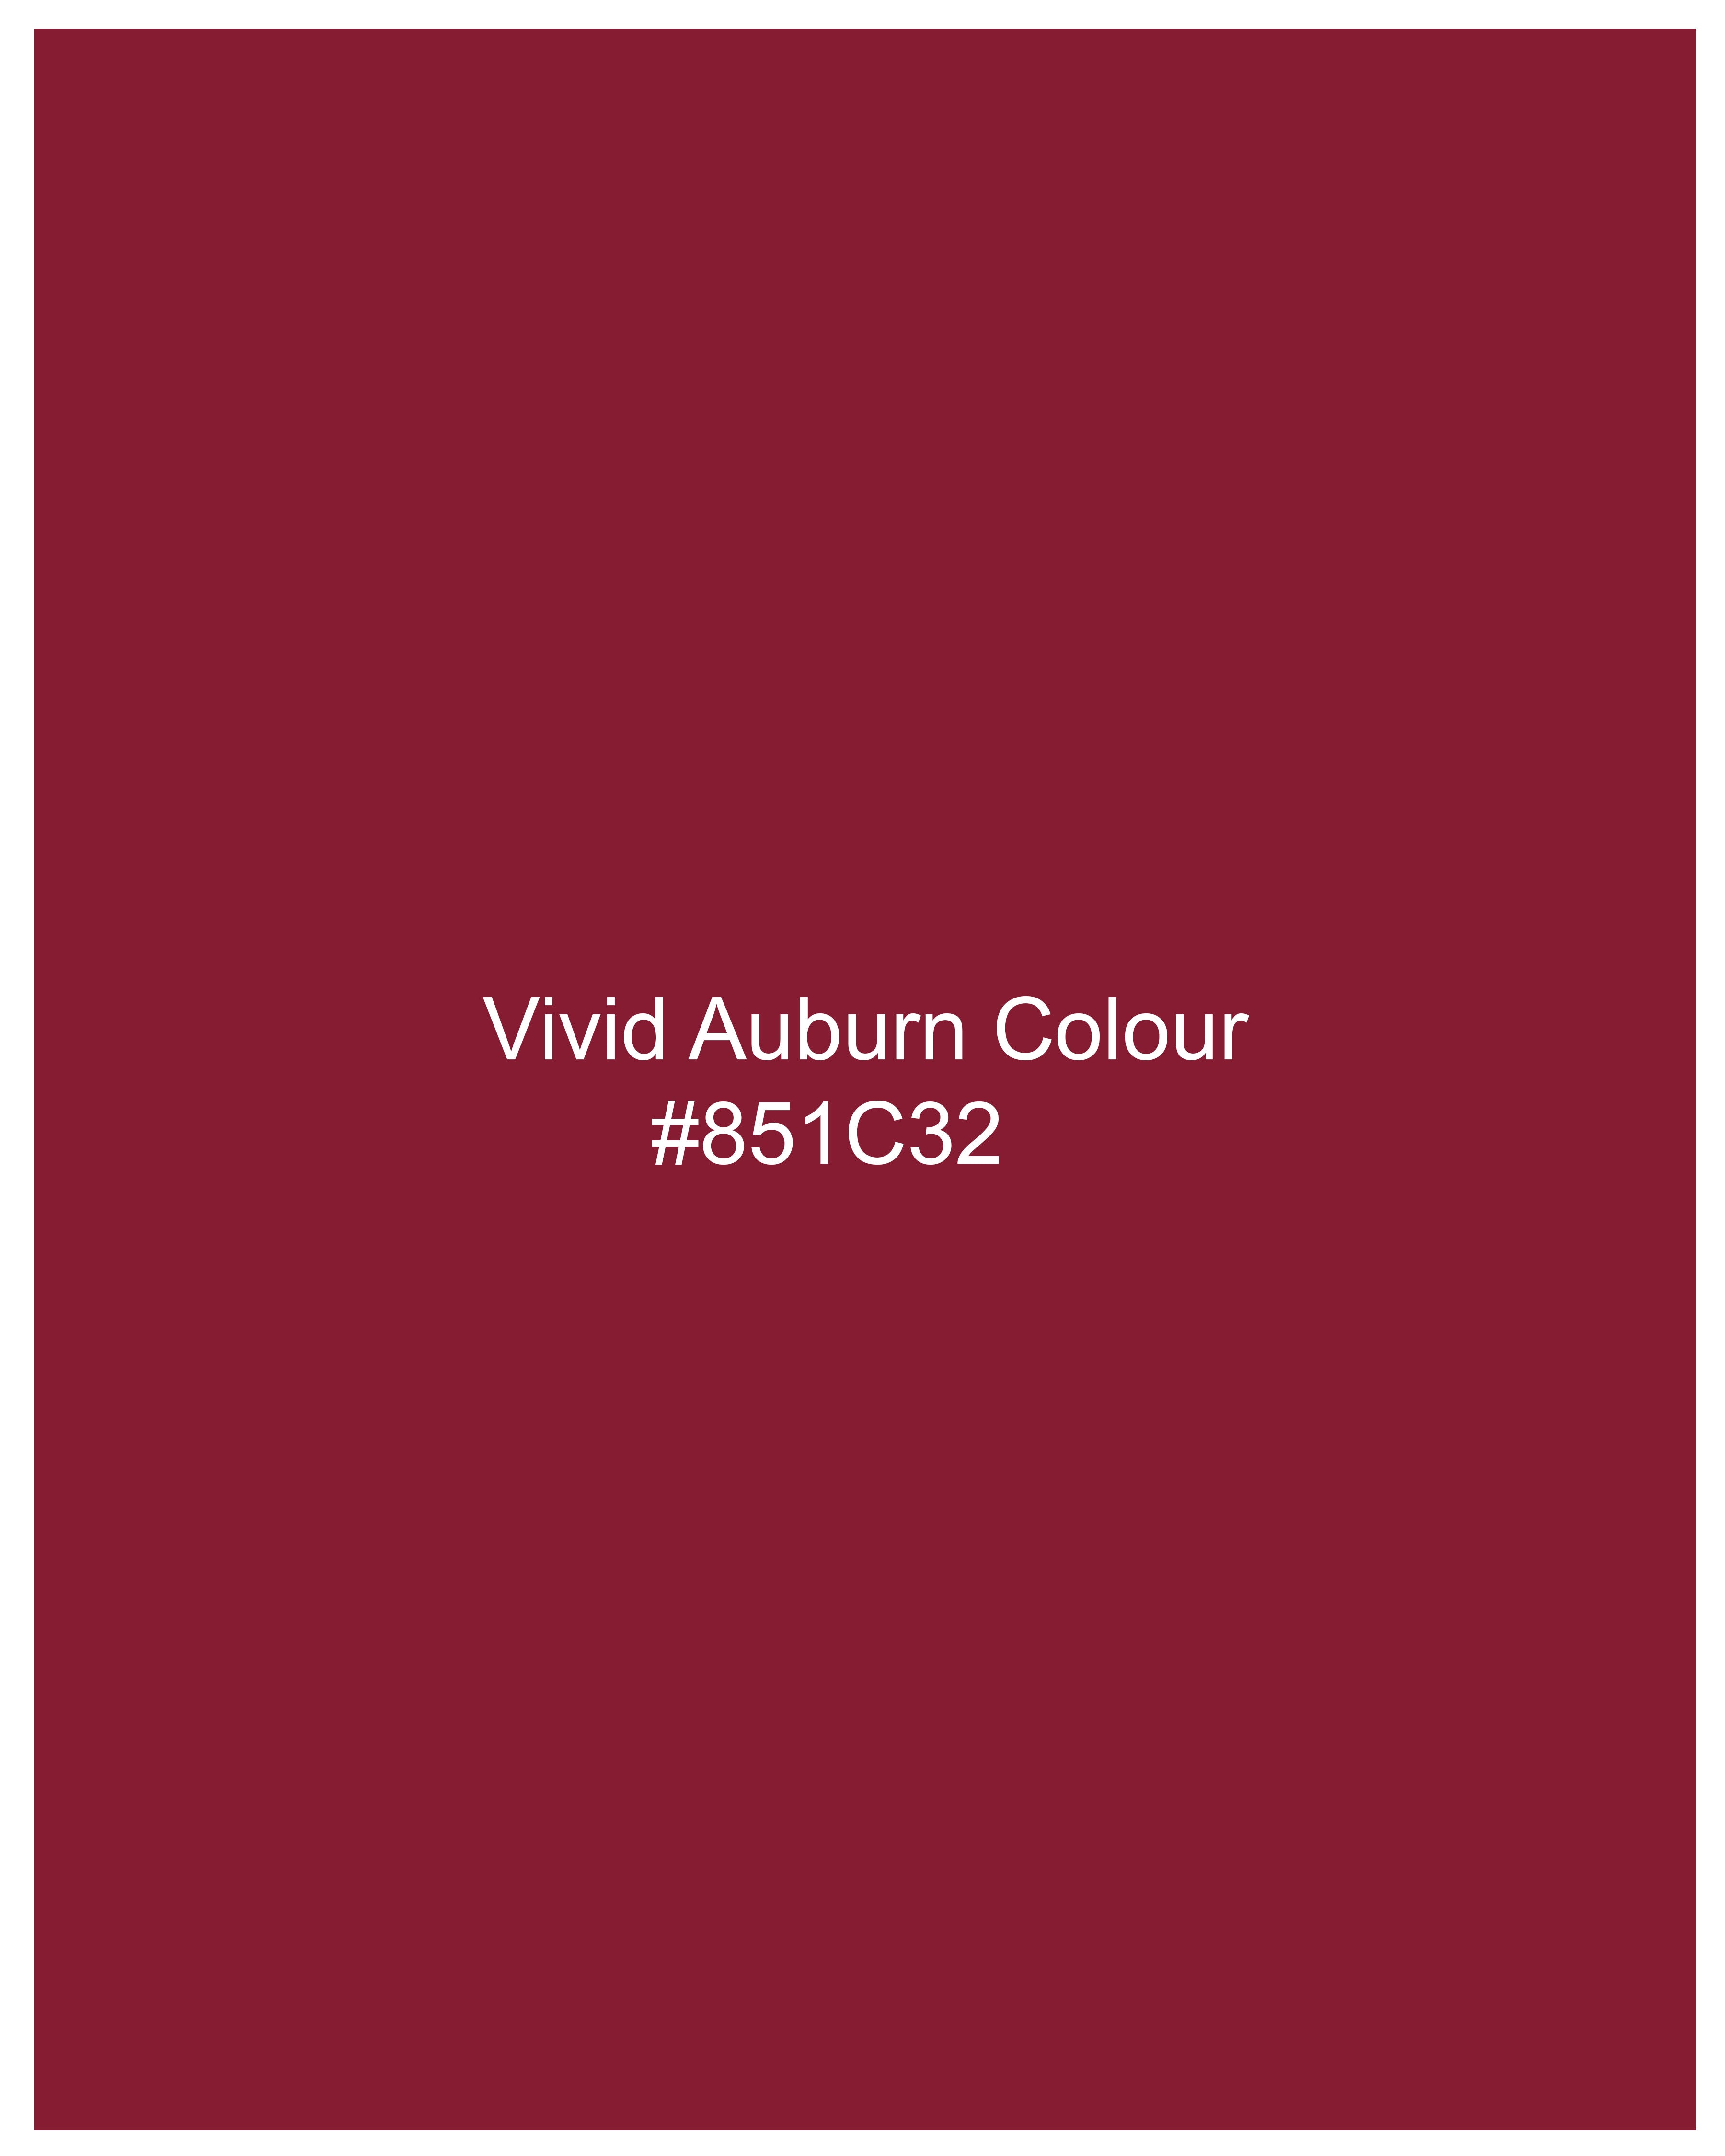 Vivid Auburn Red Subtle Sheen Snake Pleated Super Soft Premium Cotton Tuxedo Shirt 8868-BLK-TXD-38, 8868-BLK-TXD-H-38, 8868-BLK-TXD-39, 8868-BLK-TXD-H-39, 8868-BLK-TXD-40, 8868-BLK-TXD-H-40, 8868-BLK-TXD-42, 8868-BLK-TXD-H-42, 8868-BLK-TXD-44, 8868-BLK-TXD-H-44, 8868-BLK-TXD-46, 8868-BLK-TXD-H-46, 8868-BLK-TXD-48, 8868-BLK-TXD-H-48, 8868-BLK-TXD-50, 8868-BLK-TXD-H-50, 8868-BLK-TXD-52, 8868-BLK-TXD-H-52